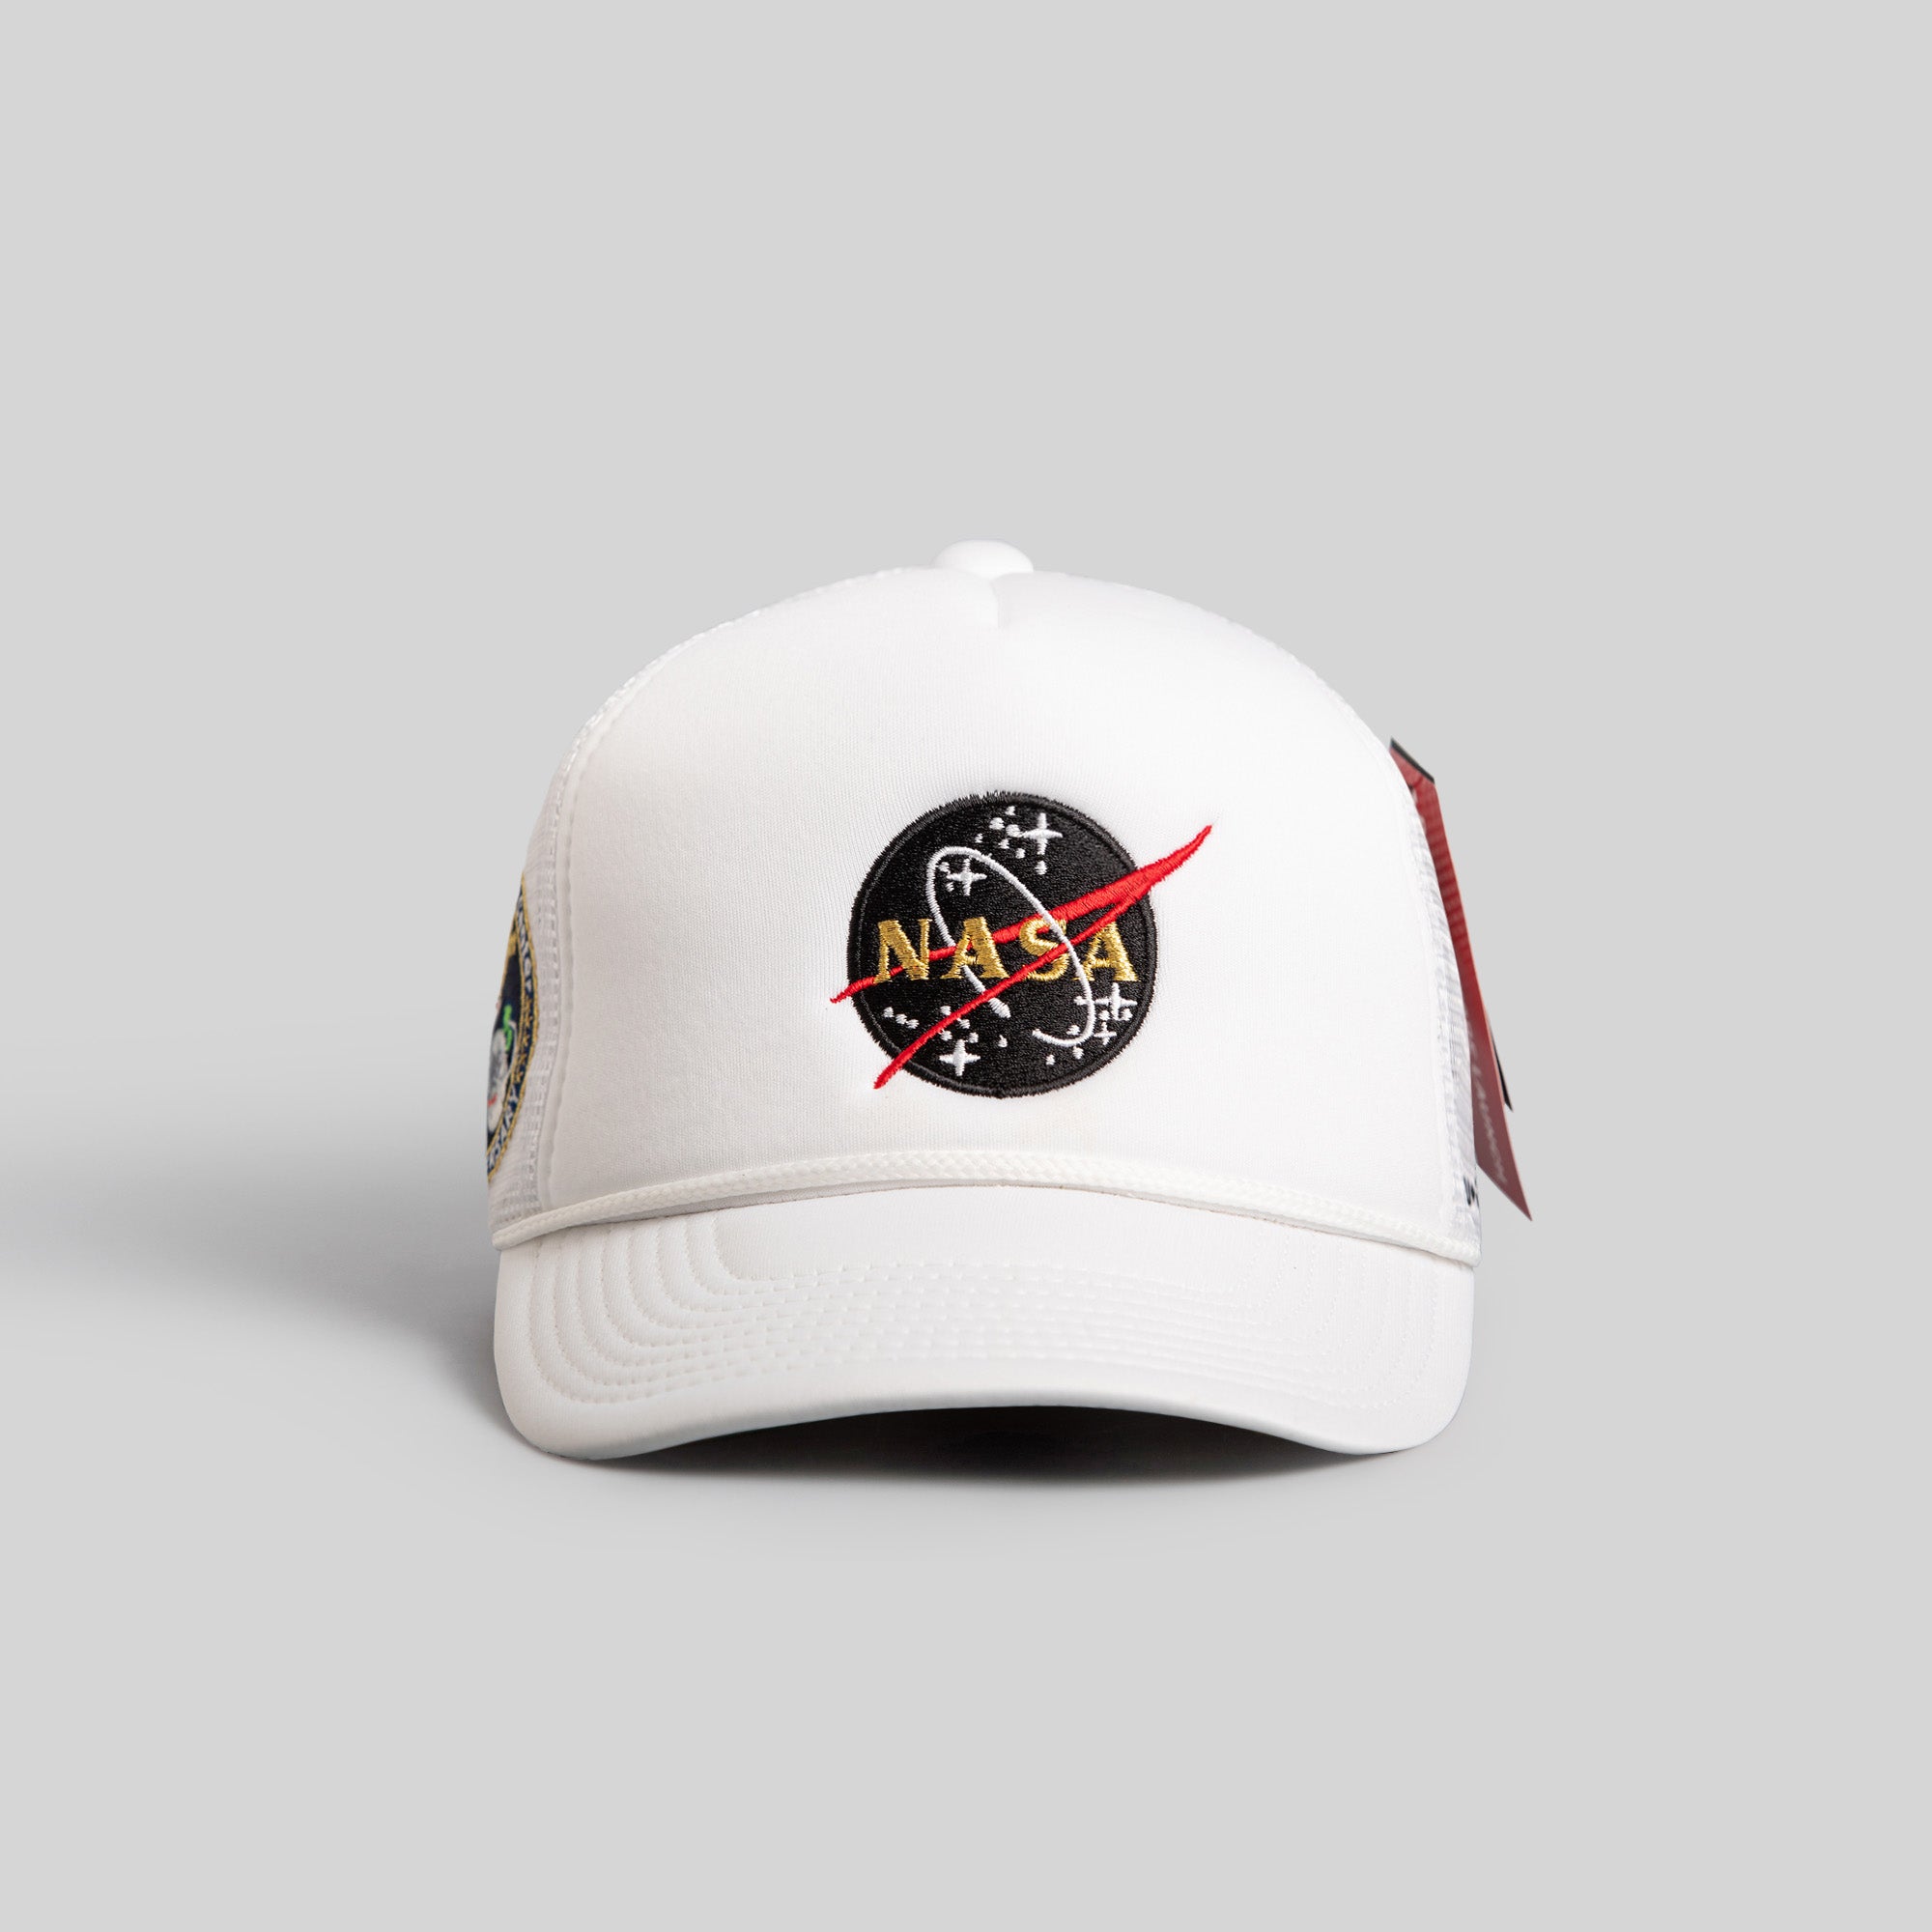 SKYLAB NASA 50TH ANNIVERSARY WHITE TRUCKER HAT